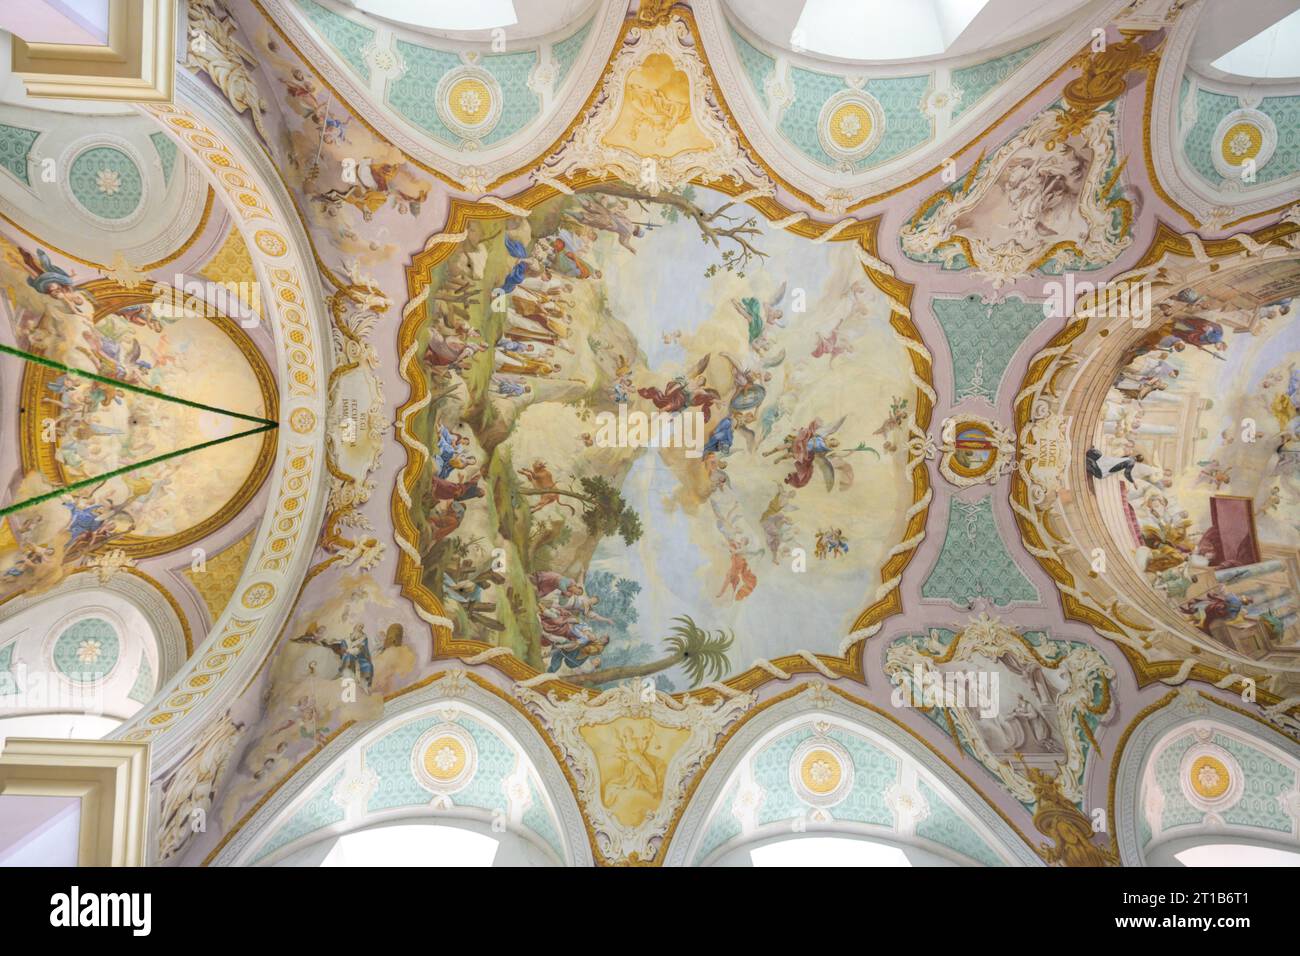 Baroque Collegiate Church with ceiling painting Founding Legend Gargano by Christian Wink, Reichersberg, Upper Austria, Austria Stock Photo